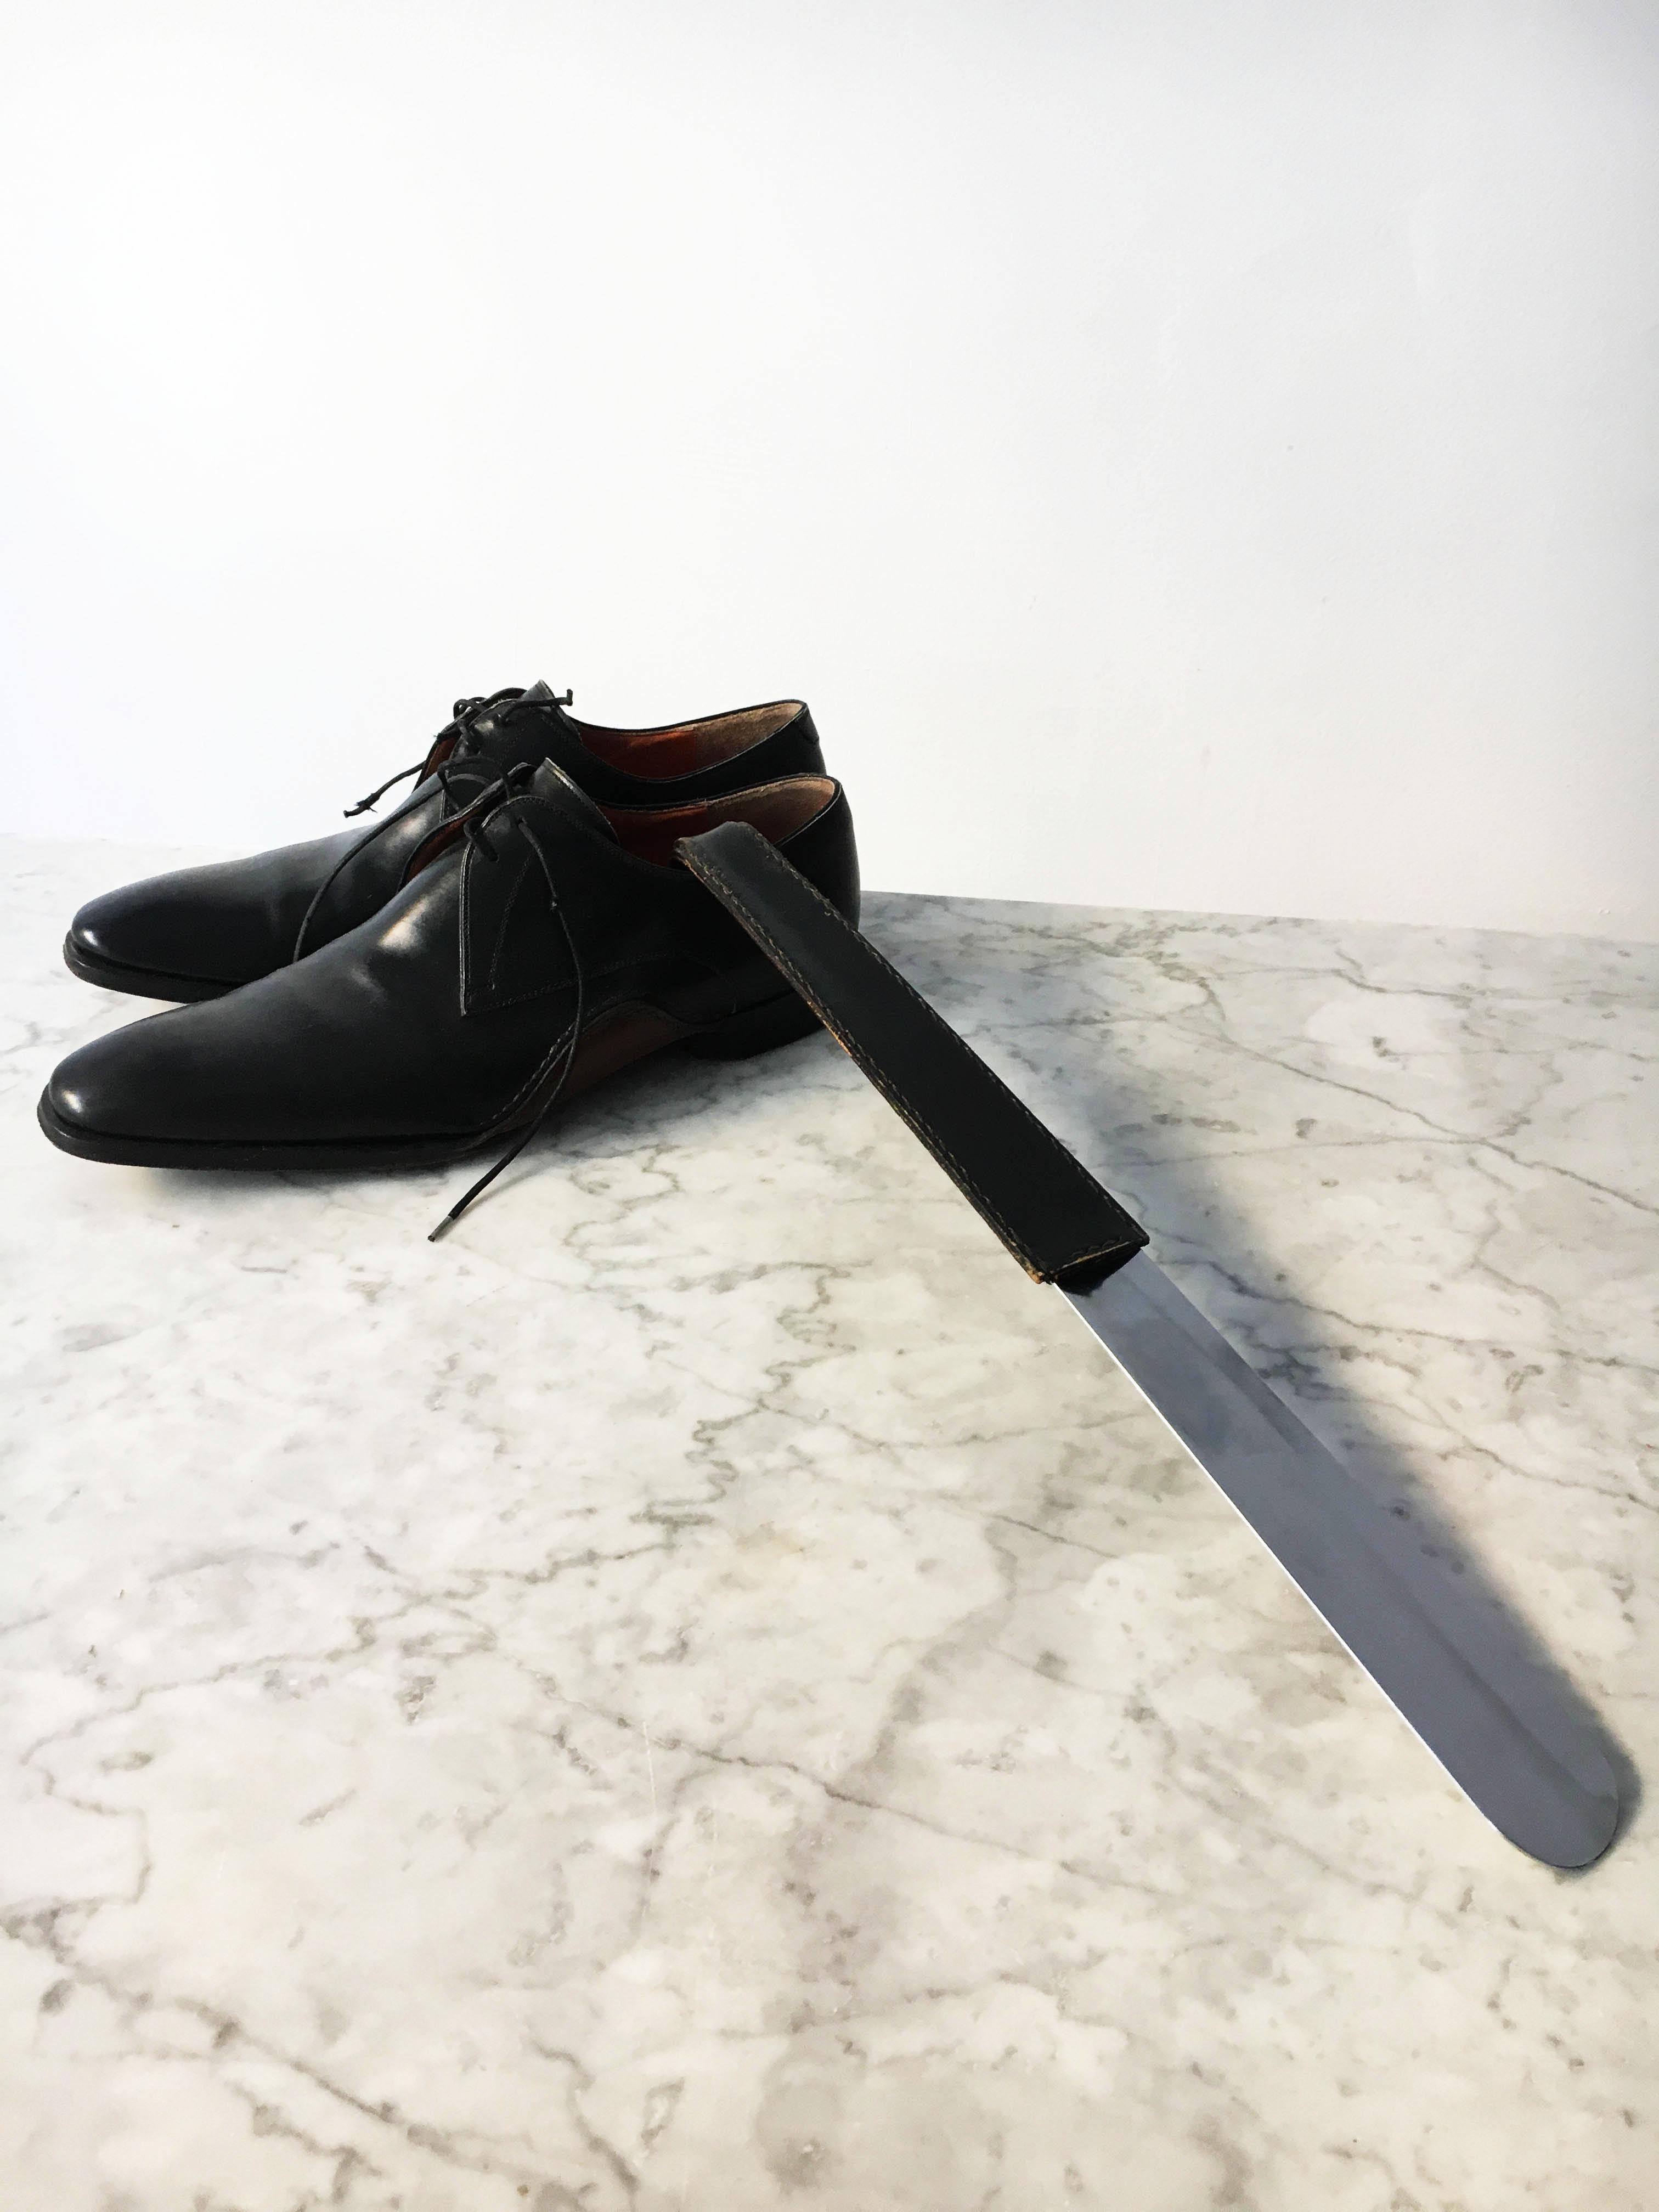 Leather Carl Auböck Shoe Horn, Austria 1960s For Sale